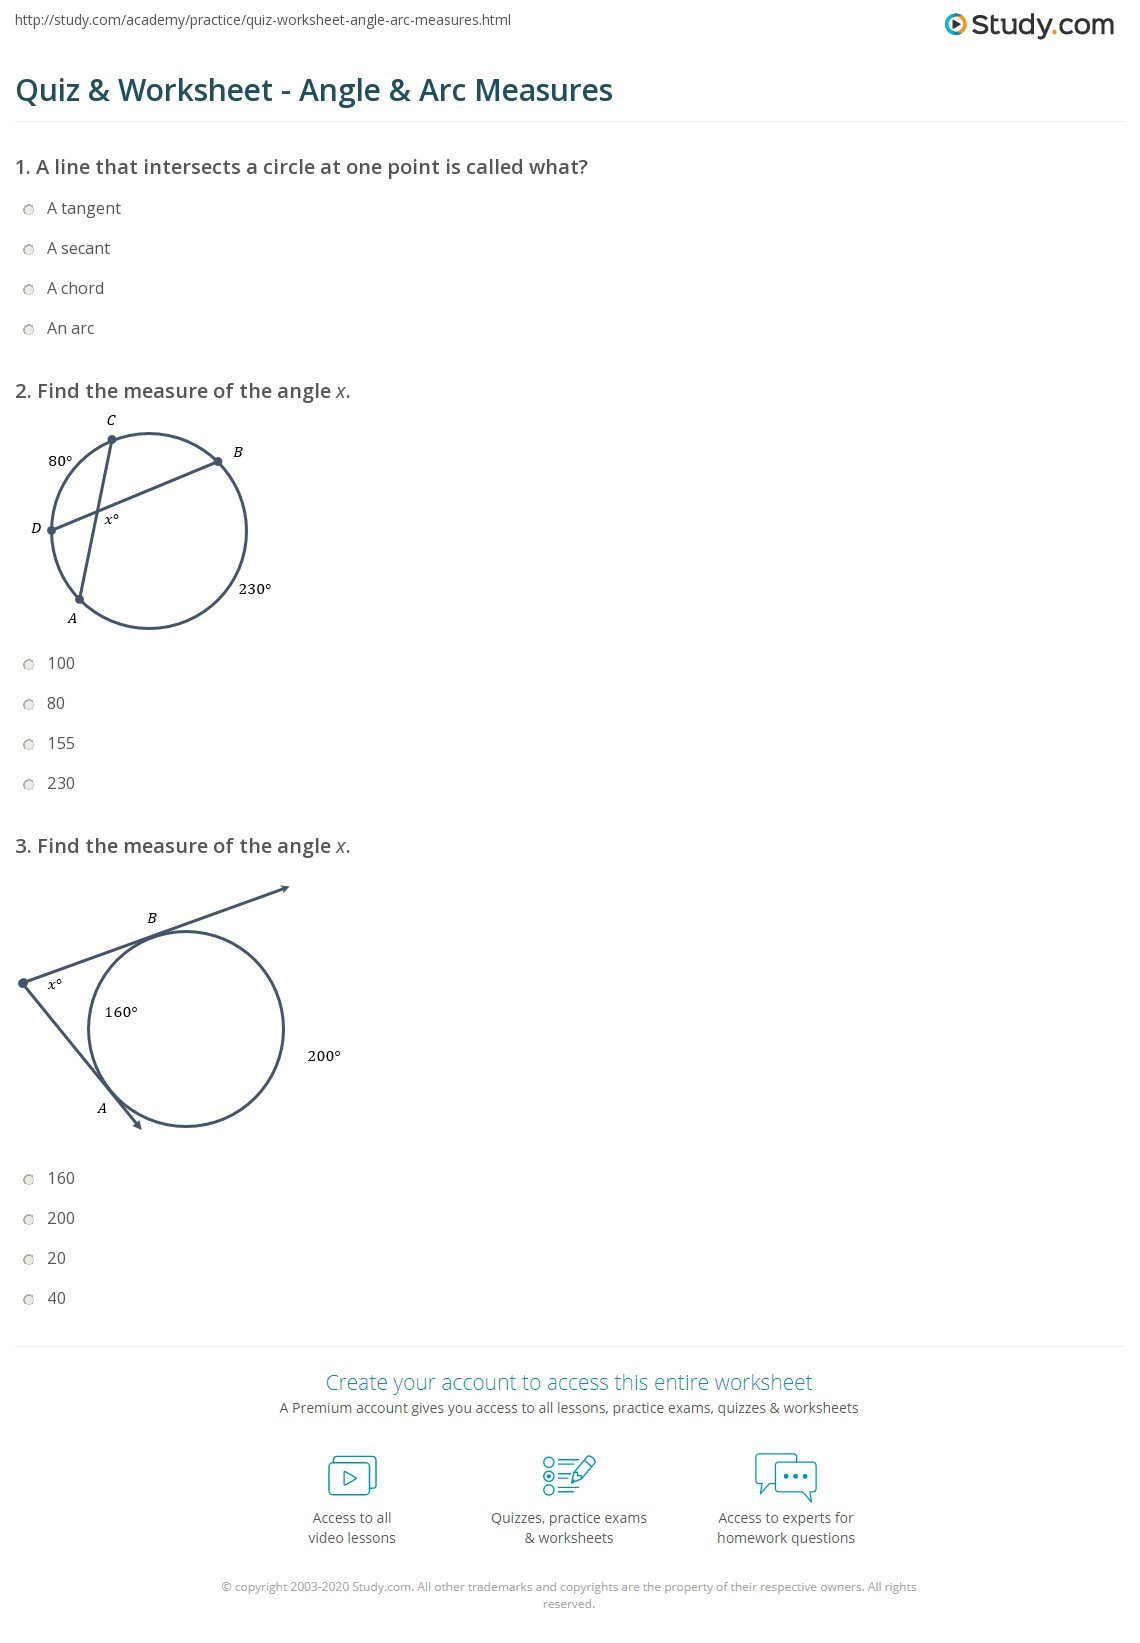 Finding Angle Measures Worksheet Quiz &amp; Worksheet Angle &amp; Arc Measures